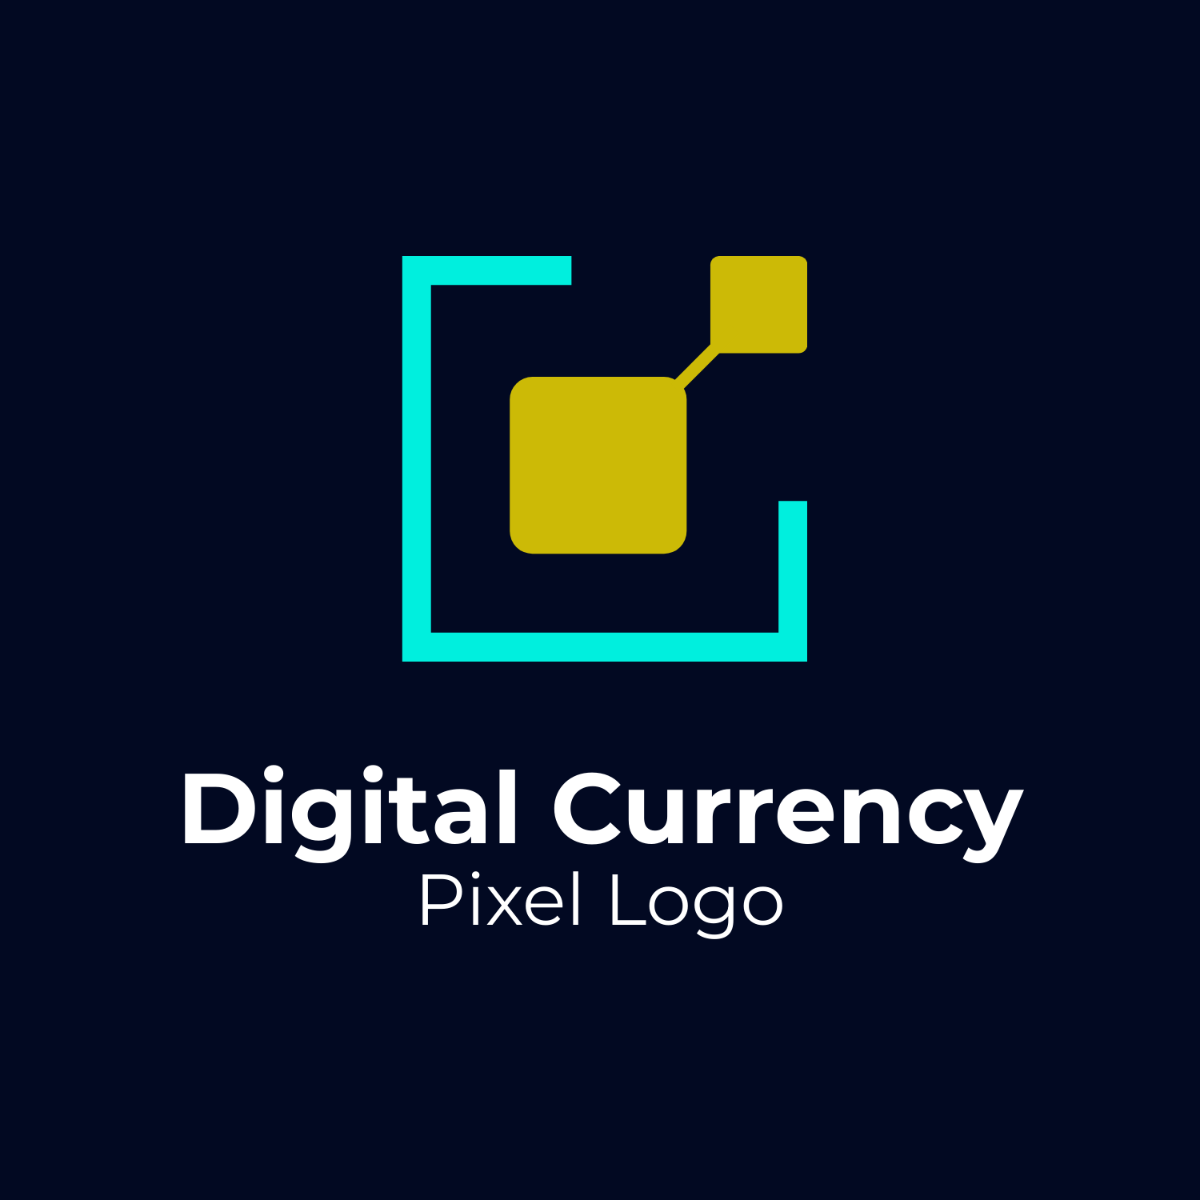 Digital Currency Pixel Logo